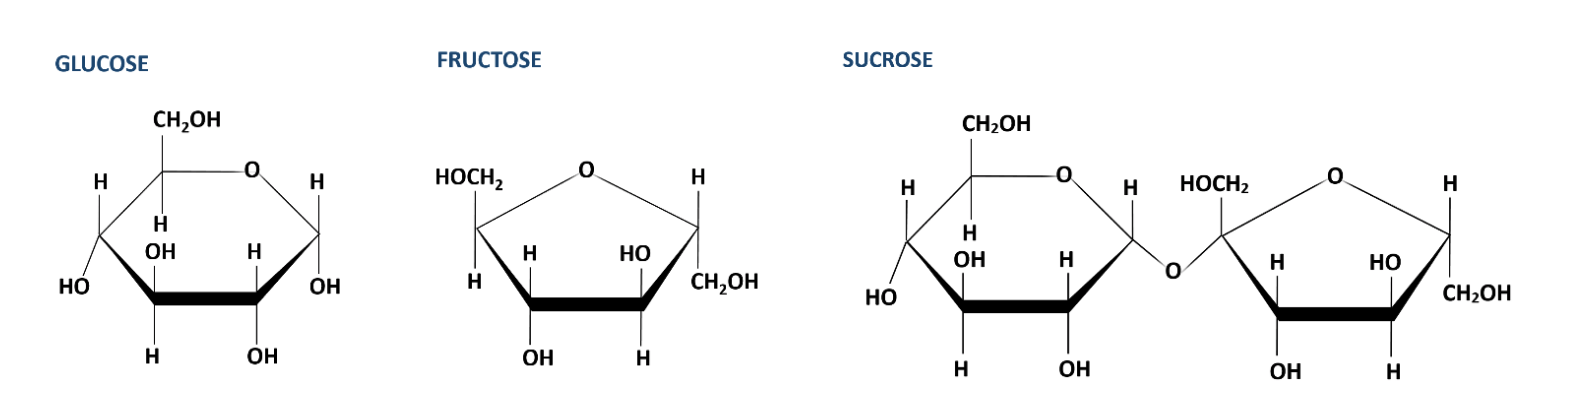 molecular structure of glucose, fructose and sucrose